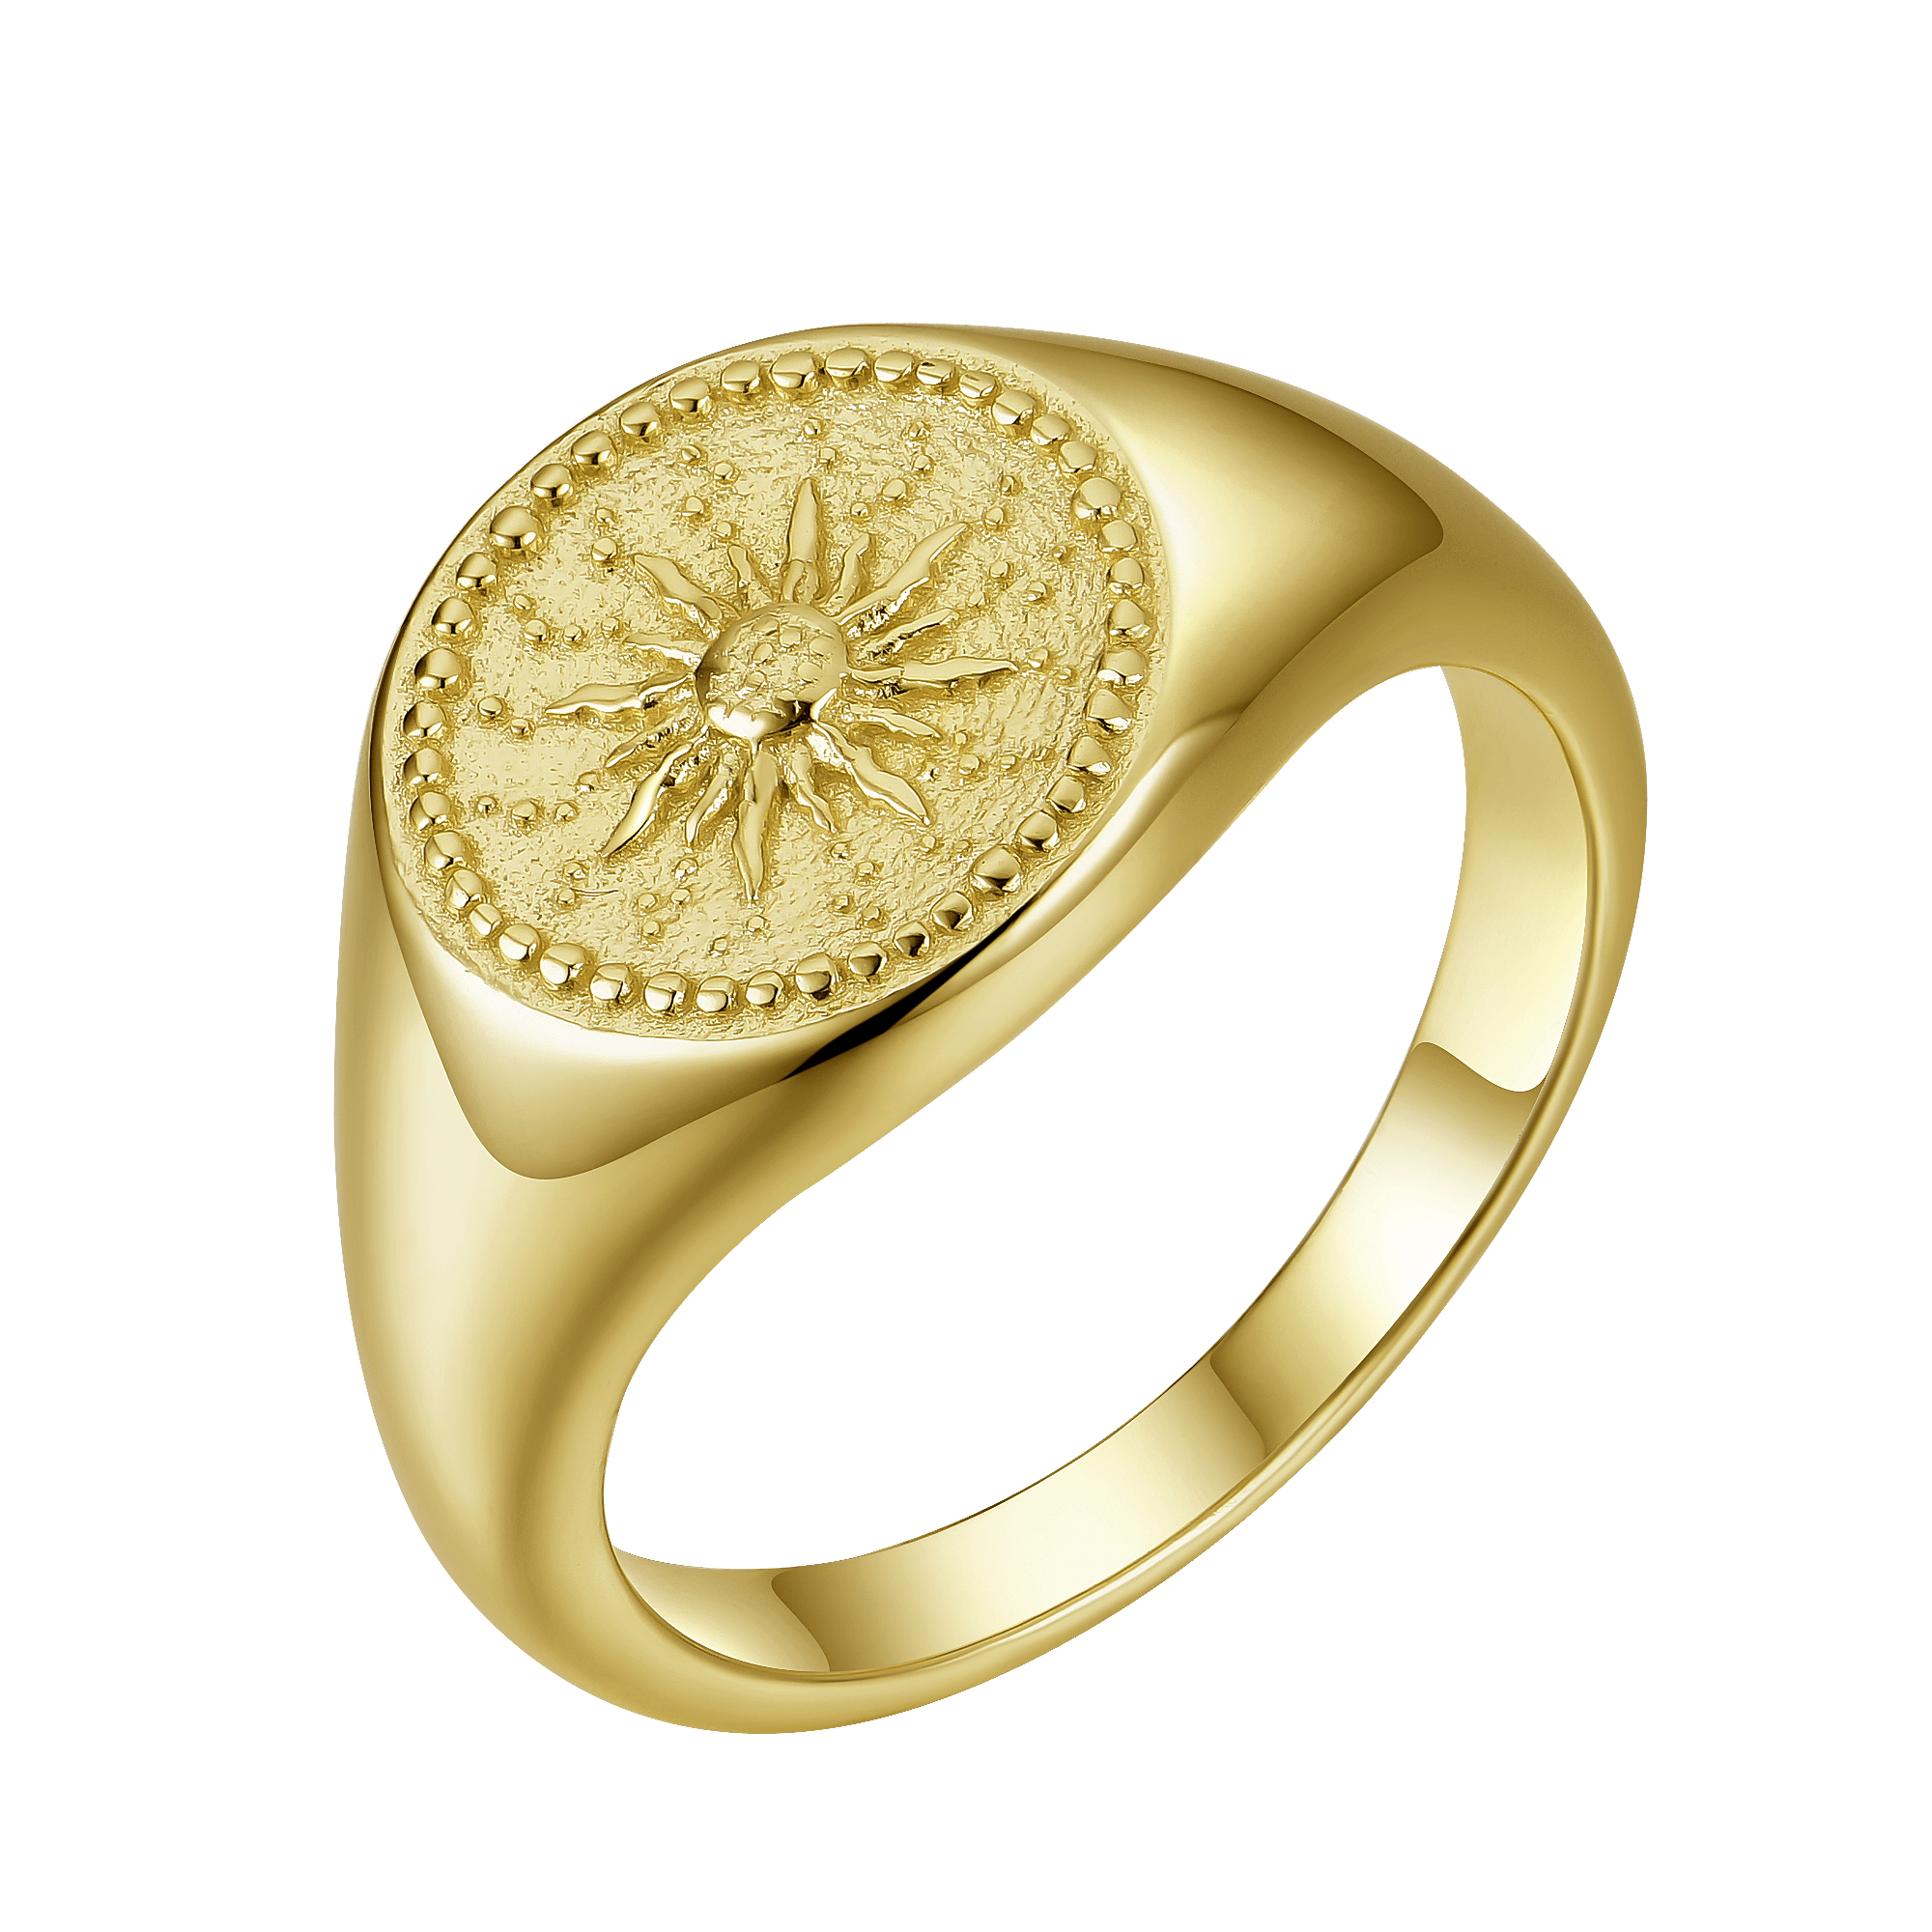 Sun Temple Ring